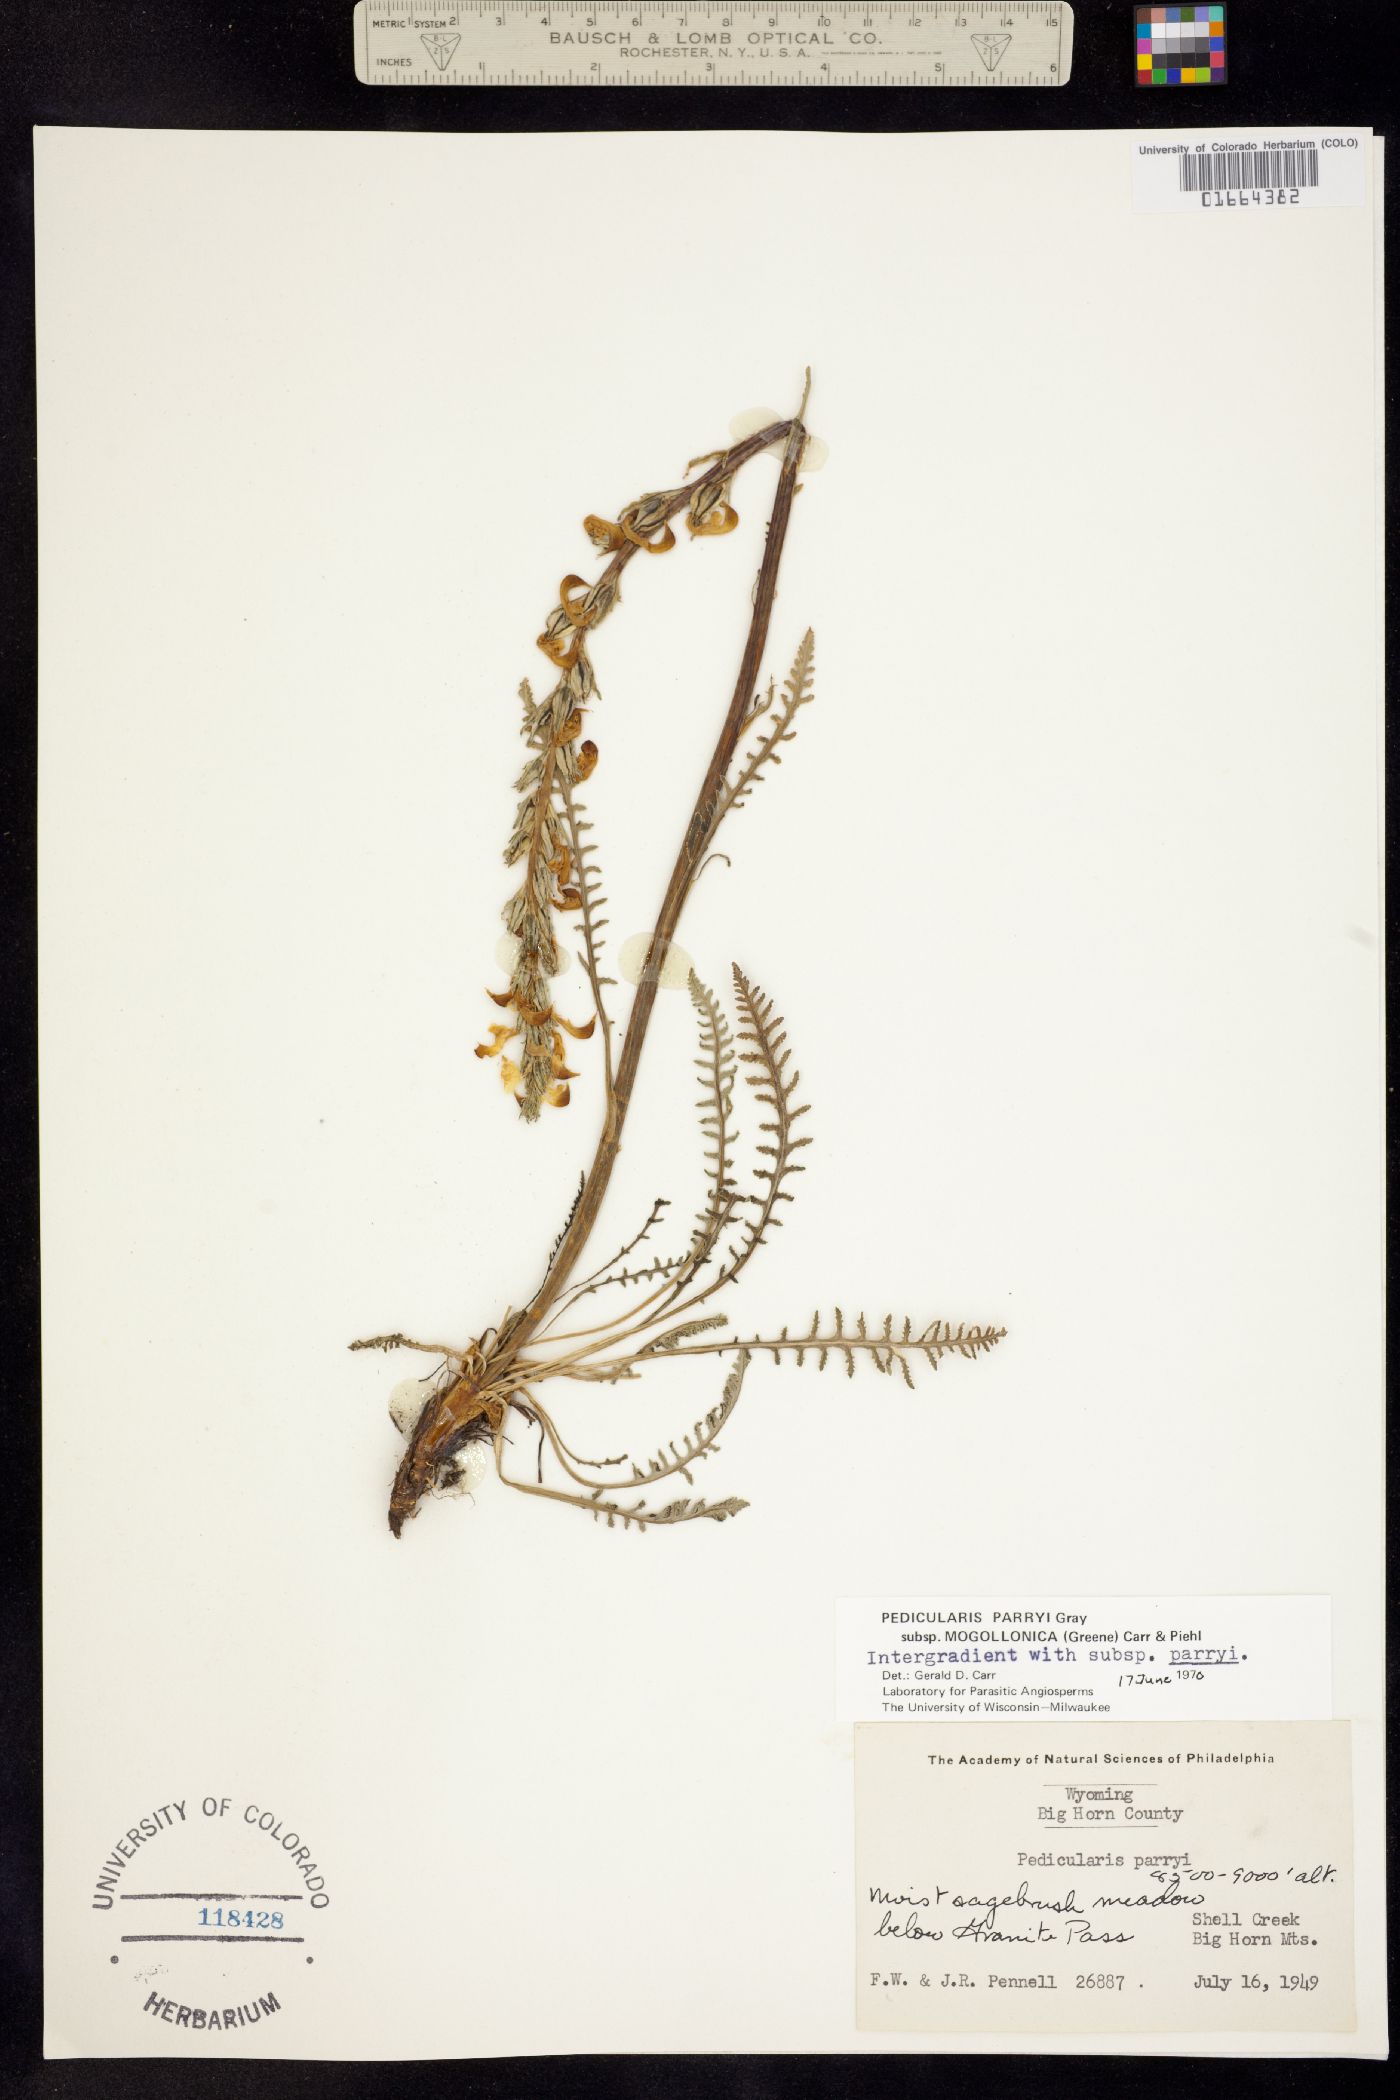 Pedicularis parryi ssp. mogollonica image